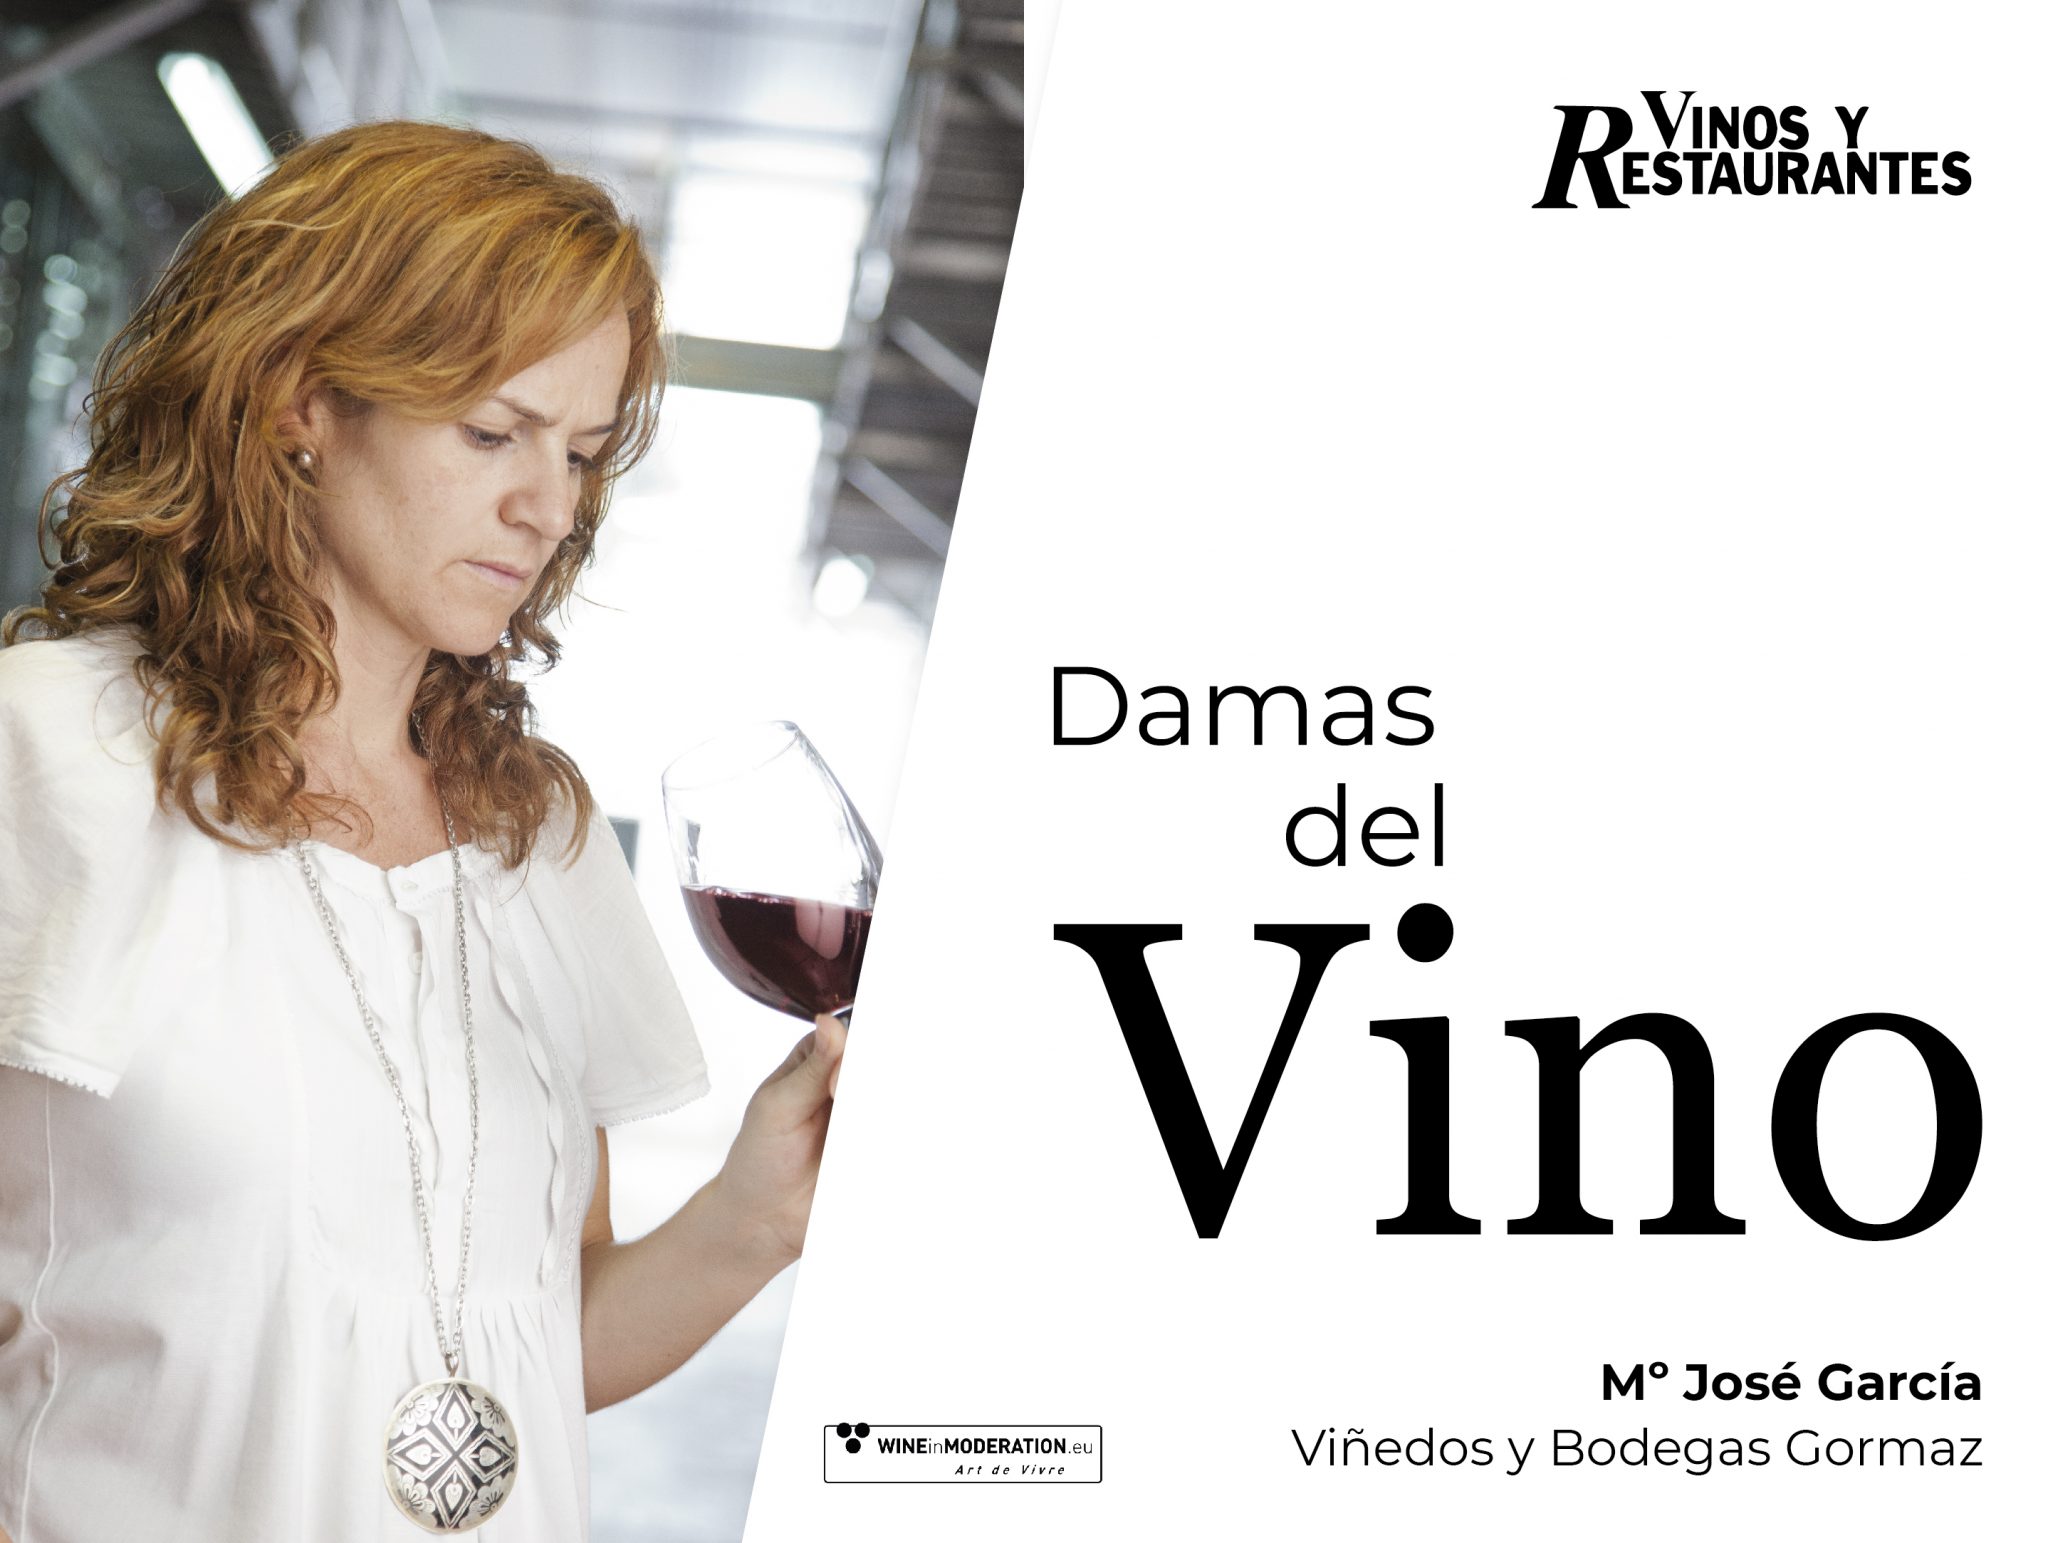 Ladies of wine and gastronomy: Viñedos y Bodegas Gormaz